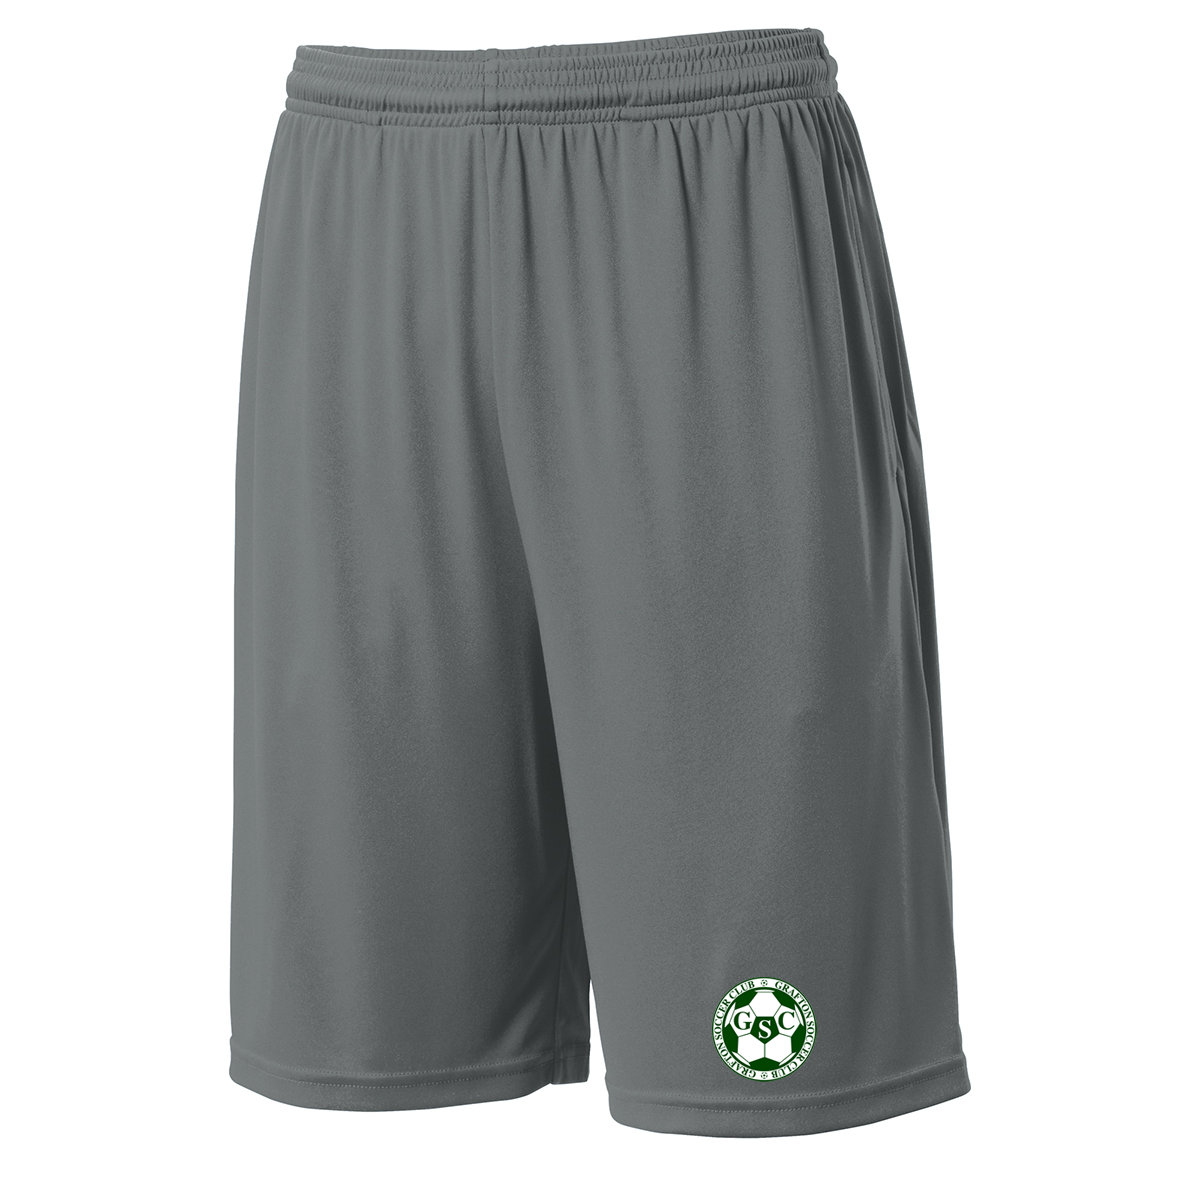 Grafton Youth Soccer Club Shorts